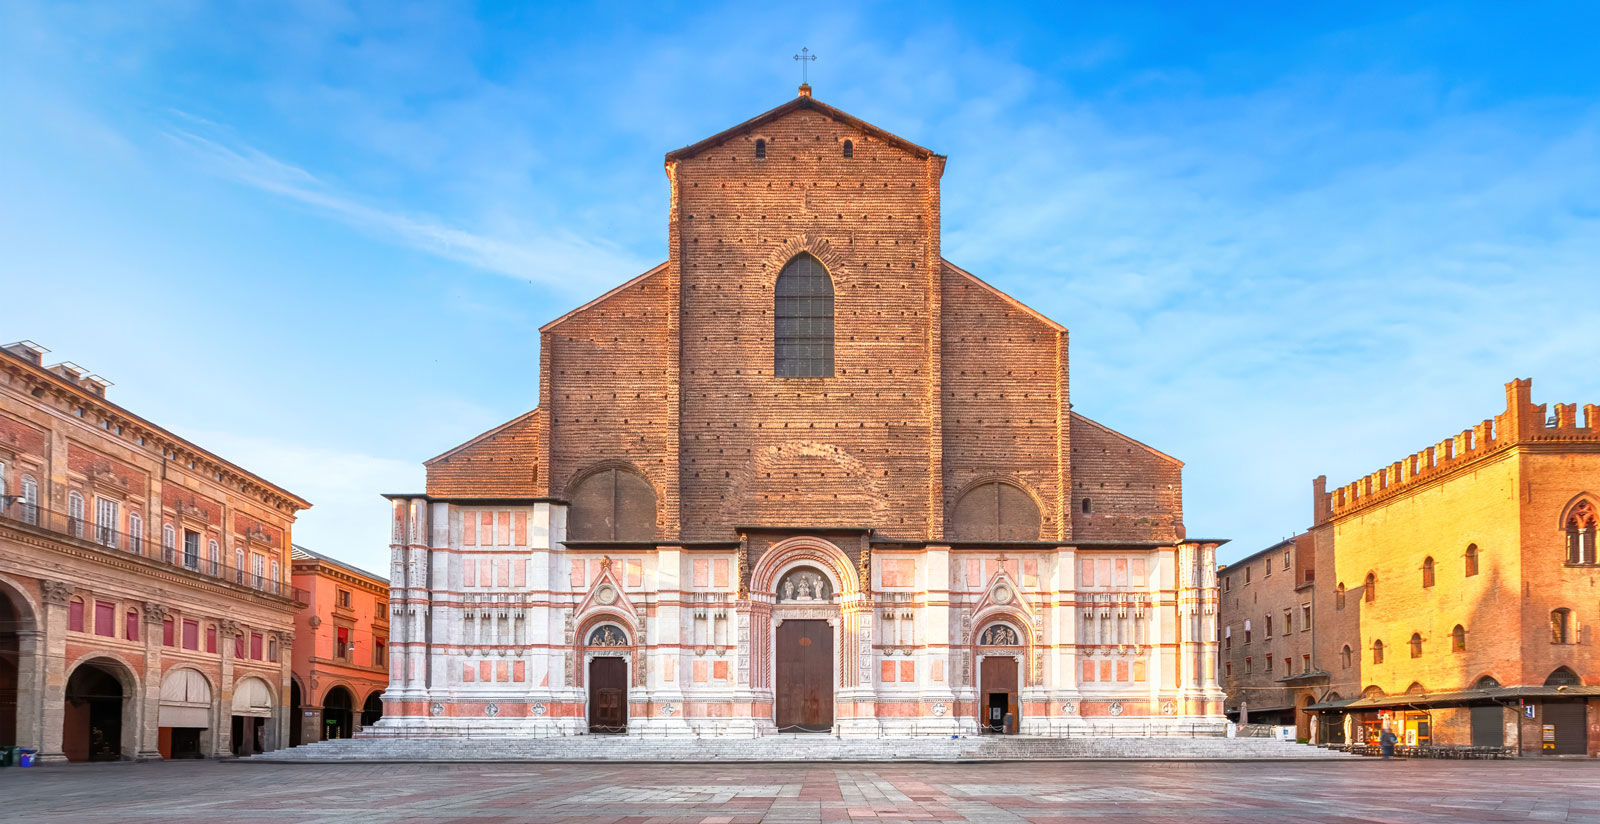 Exploring Bologna: A Complete Guide to the Majestic San Petronio Basilica 17